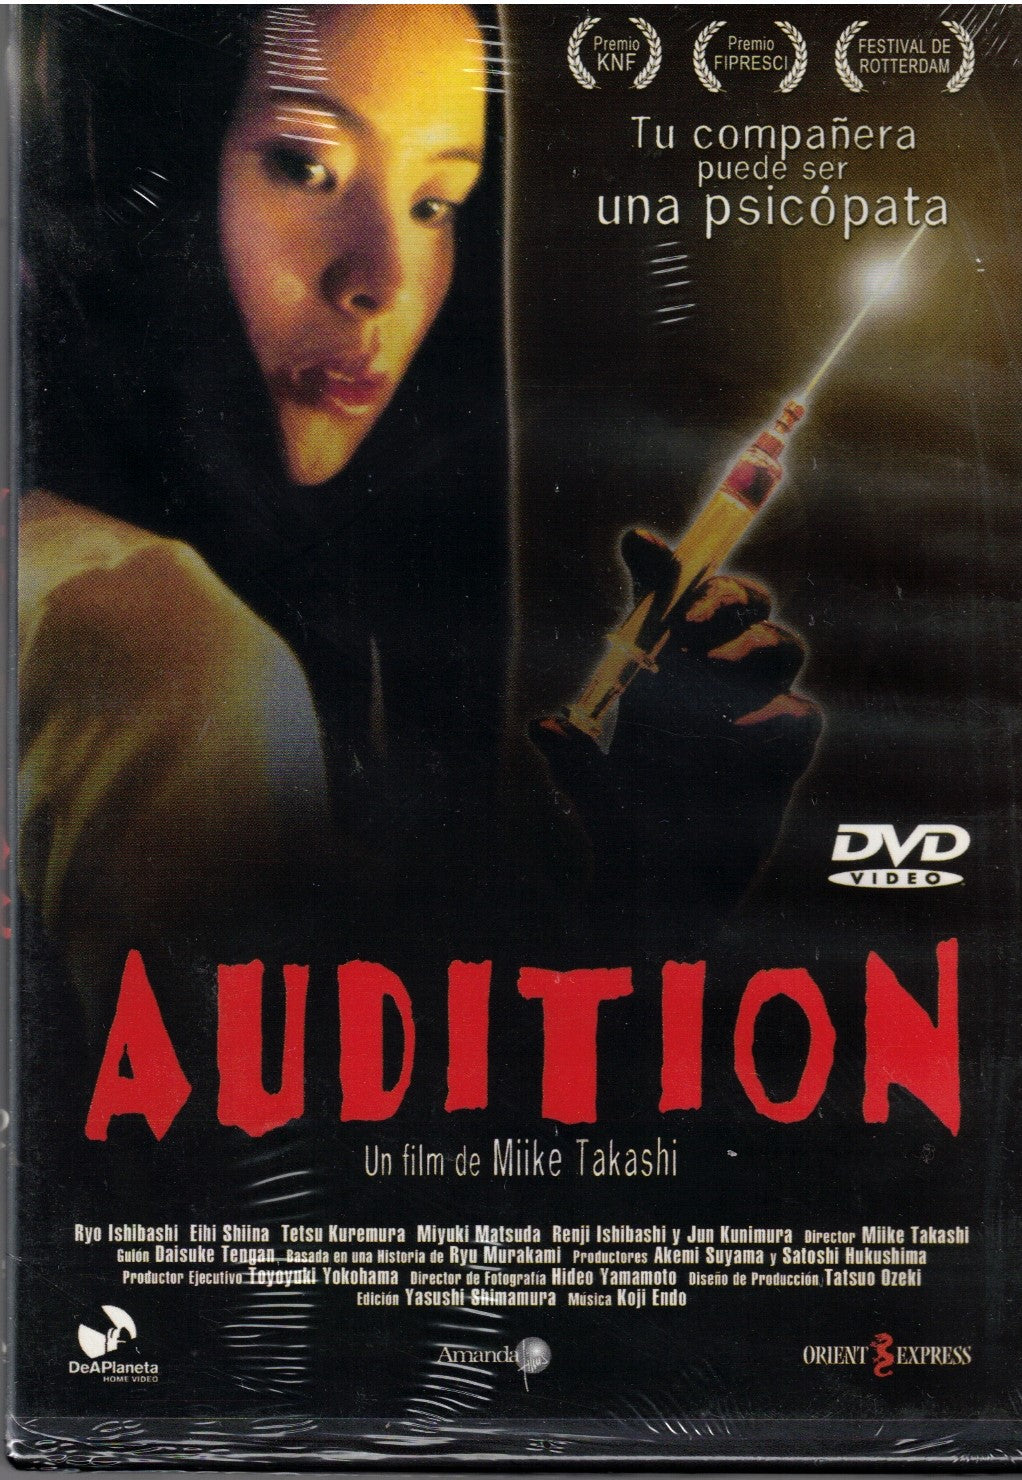 Audition (DVD Nuevo)